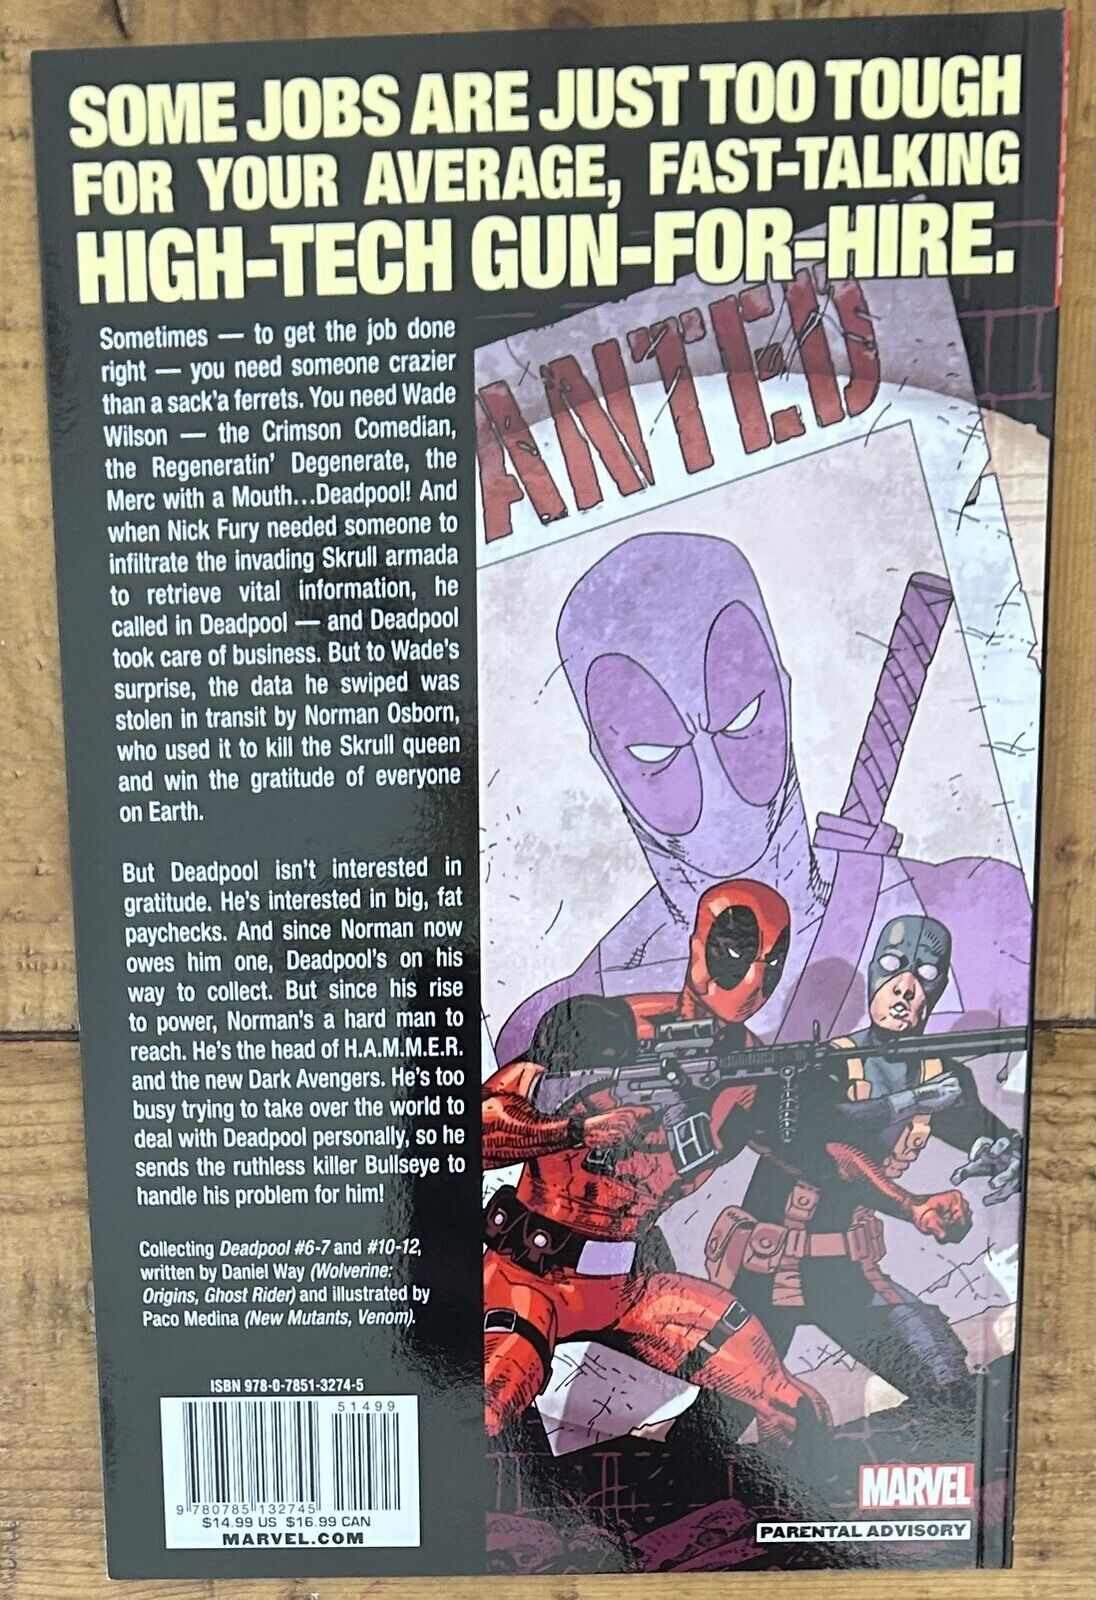 Reign　Paperback　Superhero　Comic　Books,　Volume　HipComic　Trade　Marvel,　Marvel　Comics　Deadpool　International　Dark　TPB